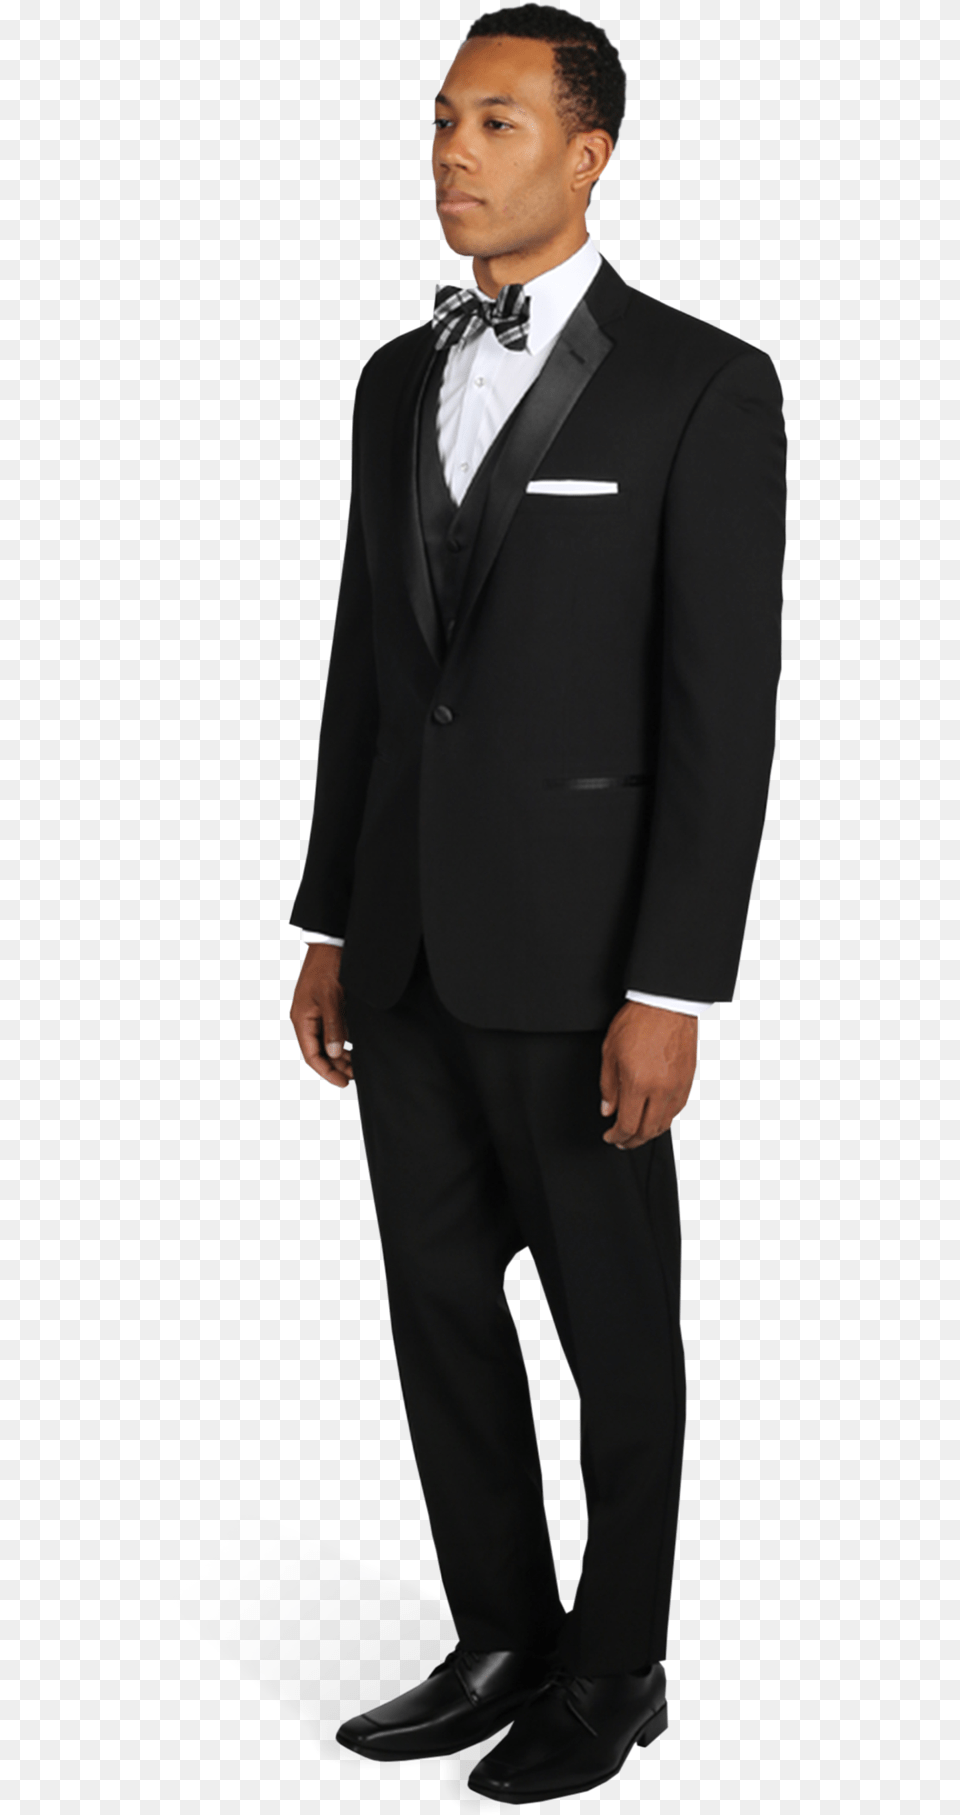 Black Notch Lapel Tuxedo With Bow Tie Black Tuxedo, Clothing, Formal Wear, Suit, Coat Free Transparent Png